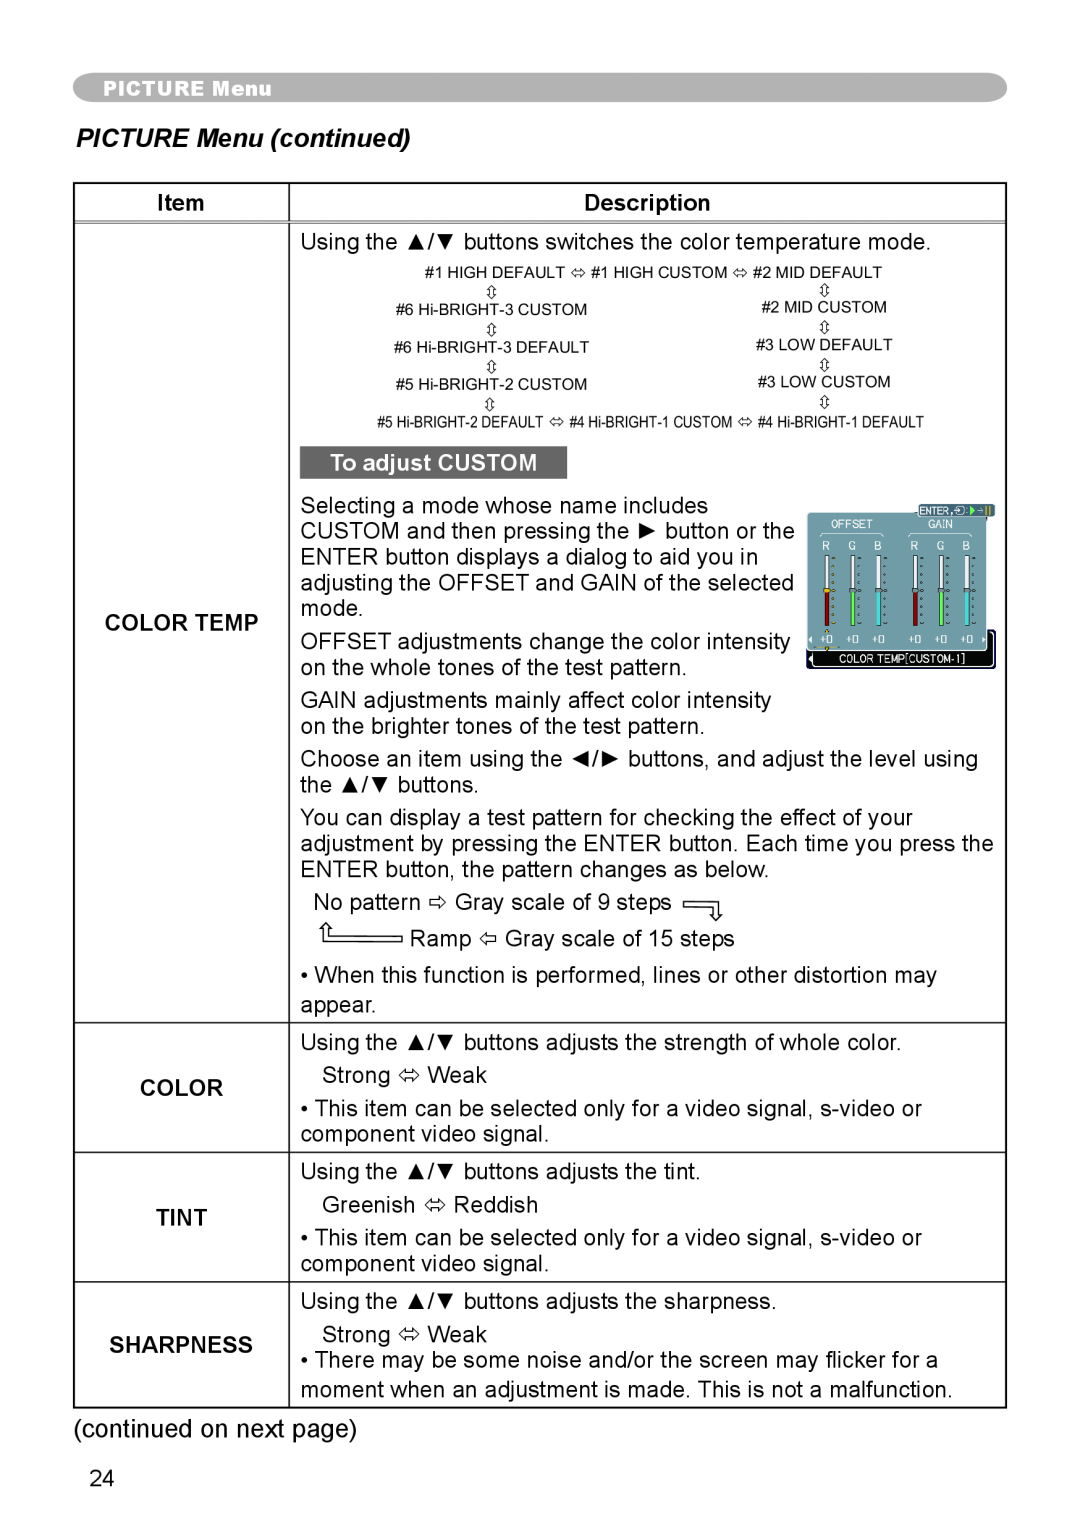 Dukane 8783 user manual PICTURE Menu continued, Description, To adjust CUSTOM, Color Temp, Tint, Sharpness 